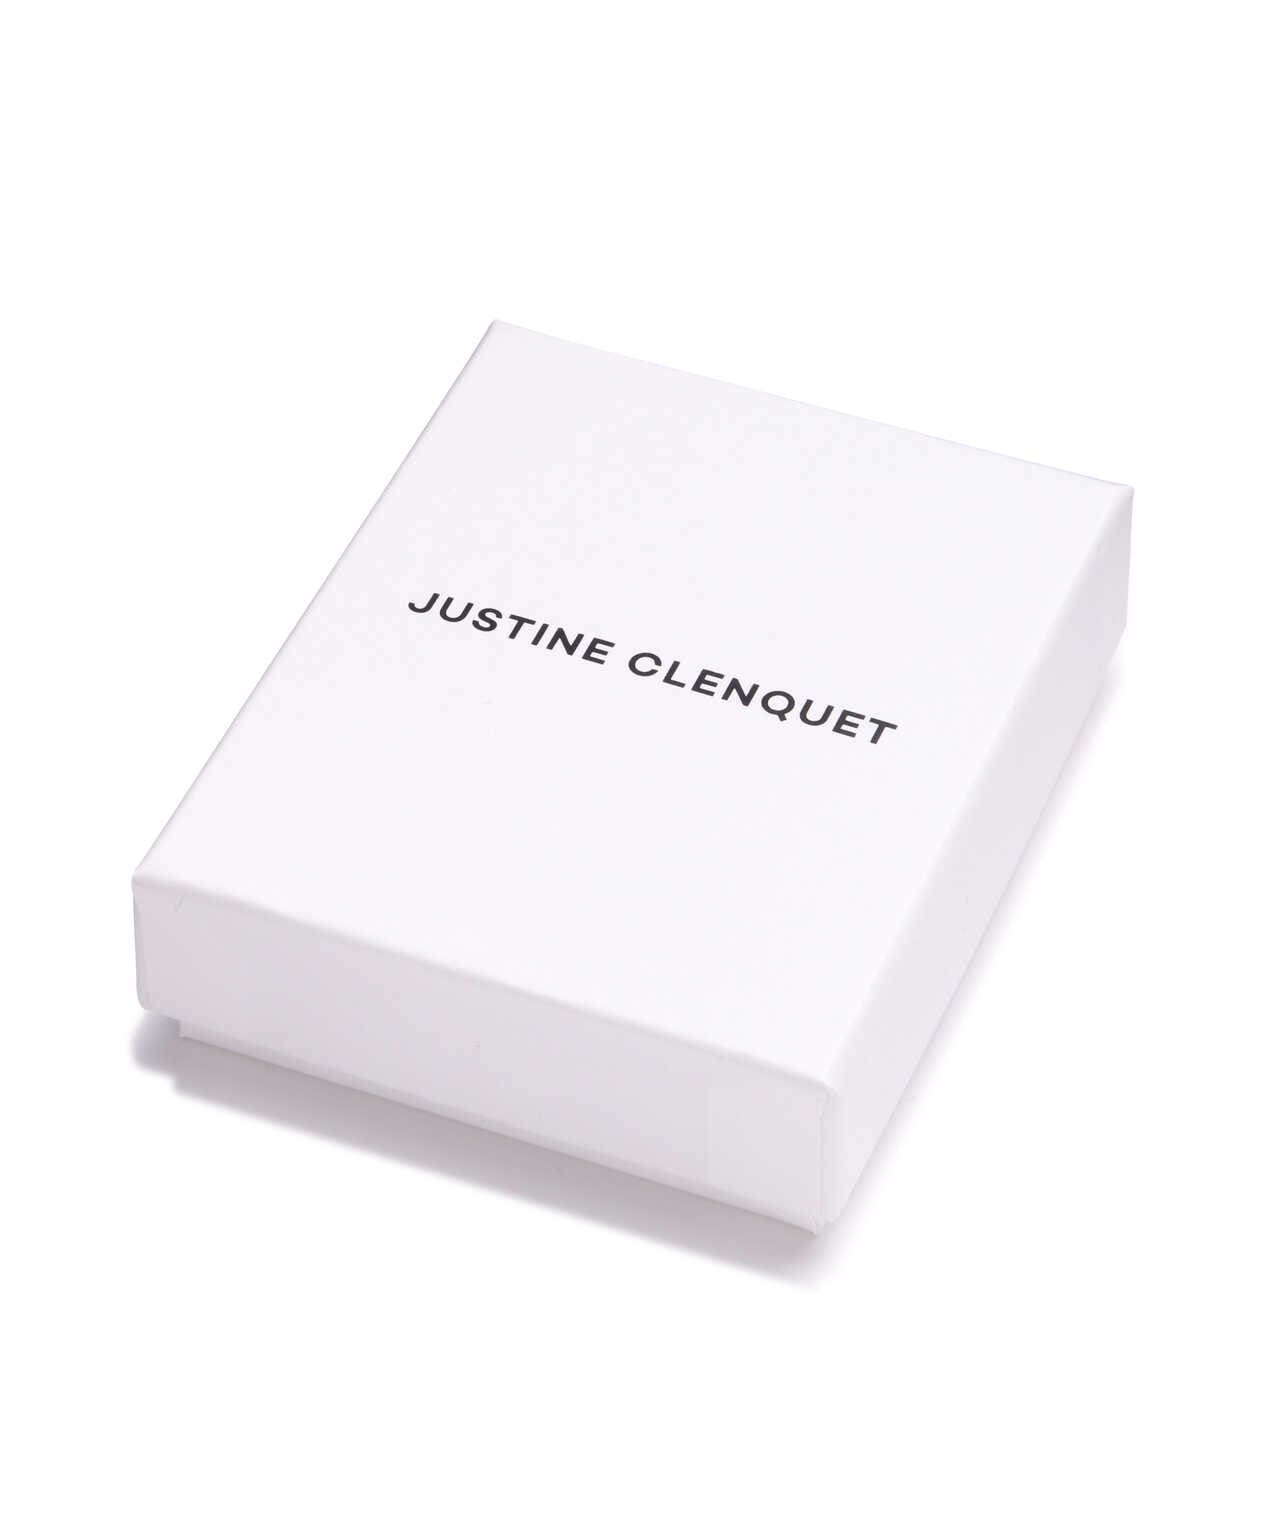 JUSTINE CLENQUET/ジュスティーヌ・クランケ/Alexis bracelet | ROYAL ...